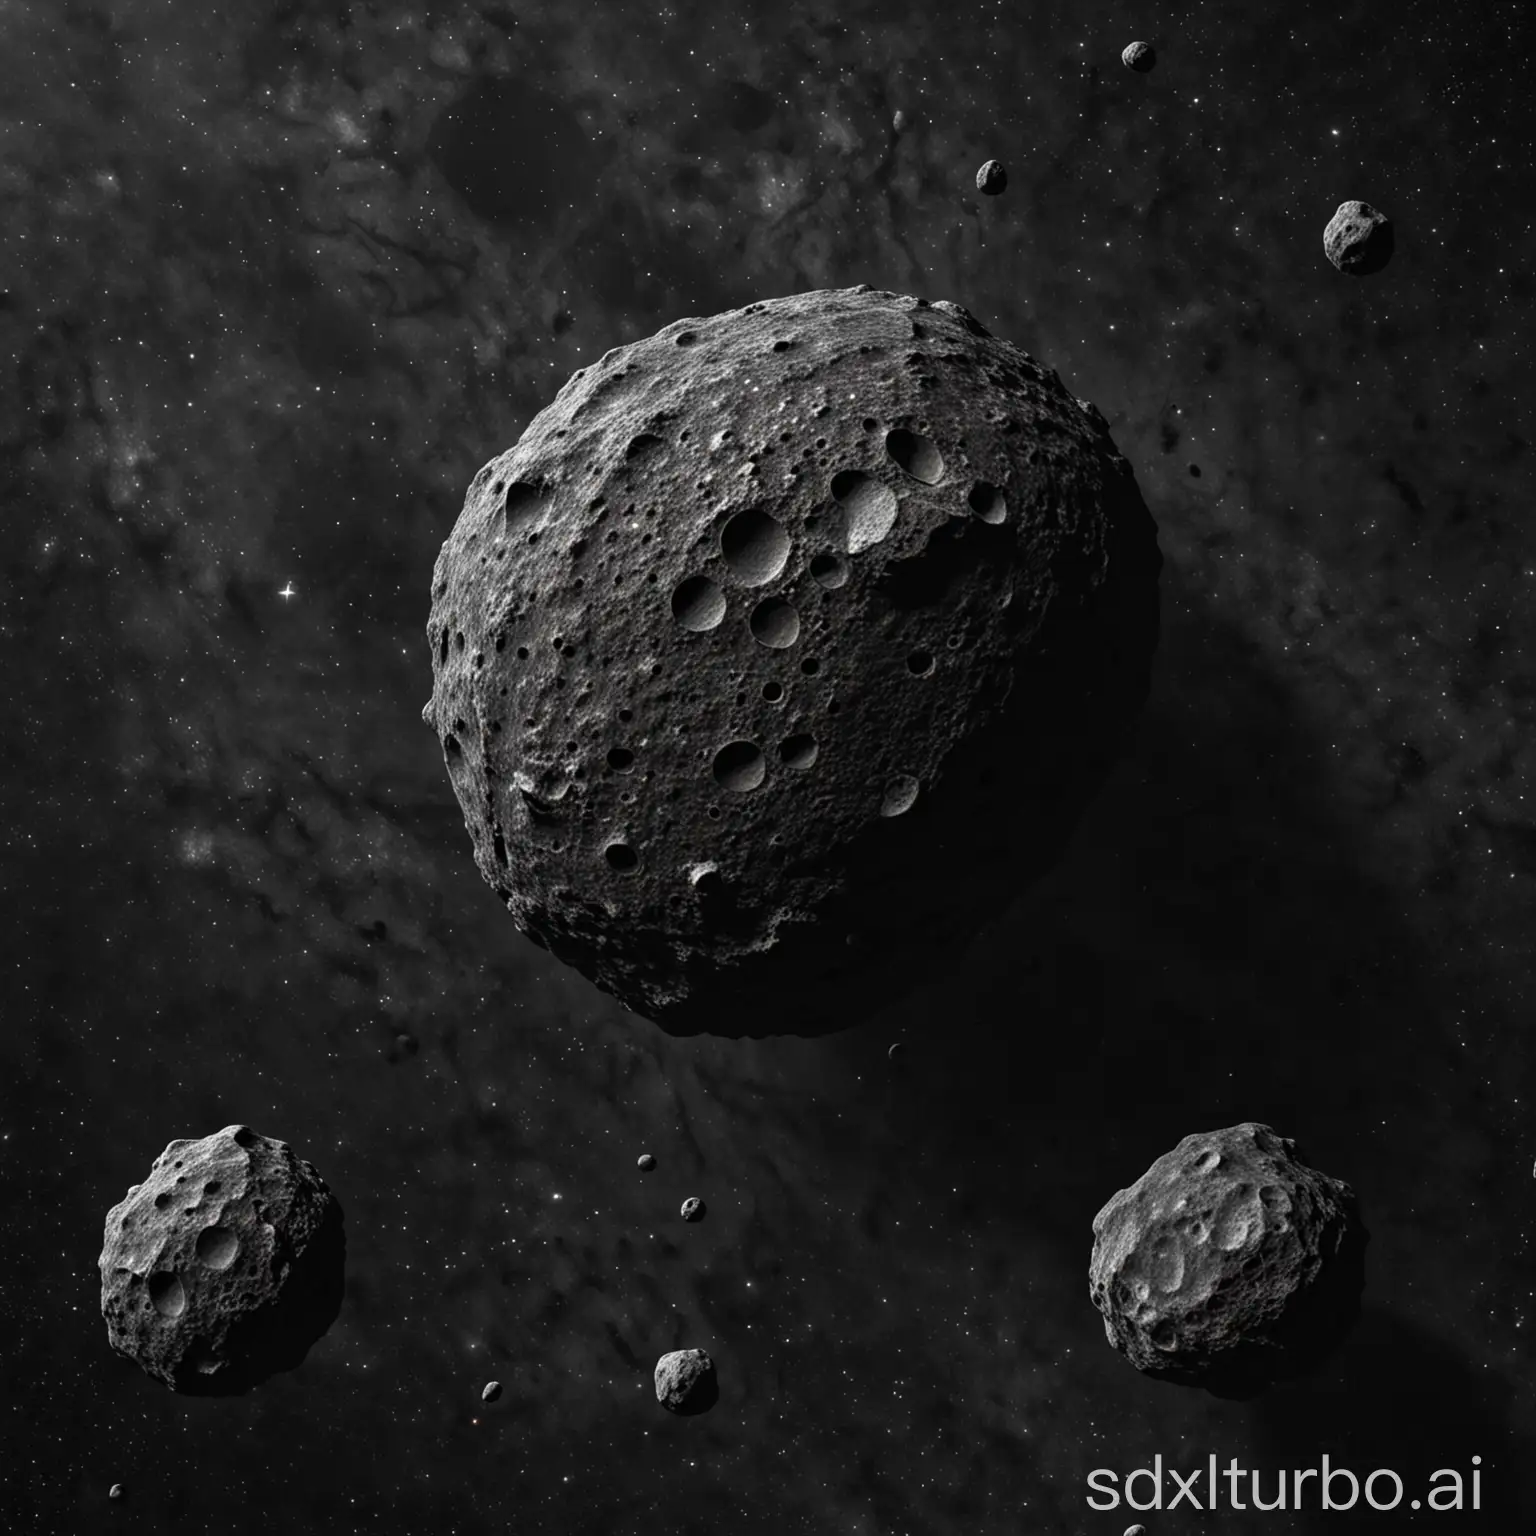 a realistic asteroiden texture, dark athmosphere